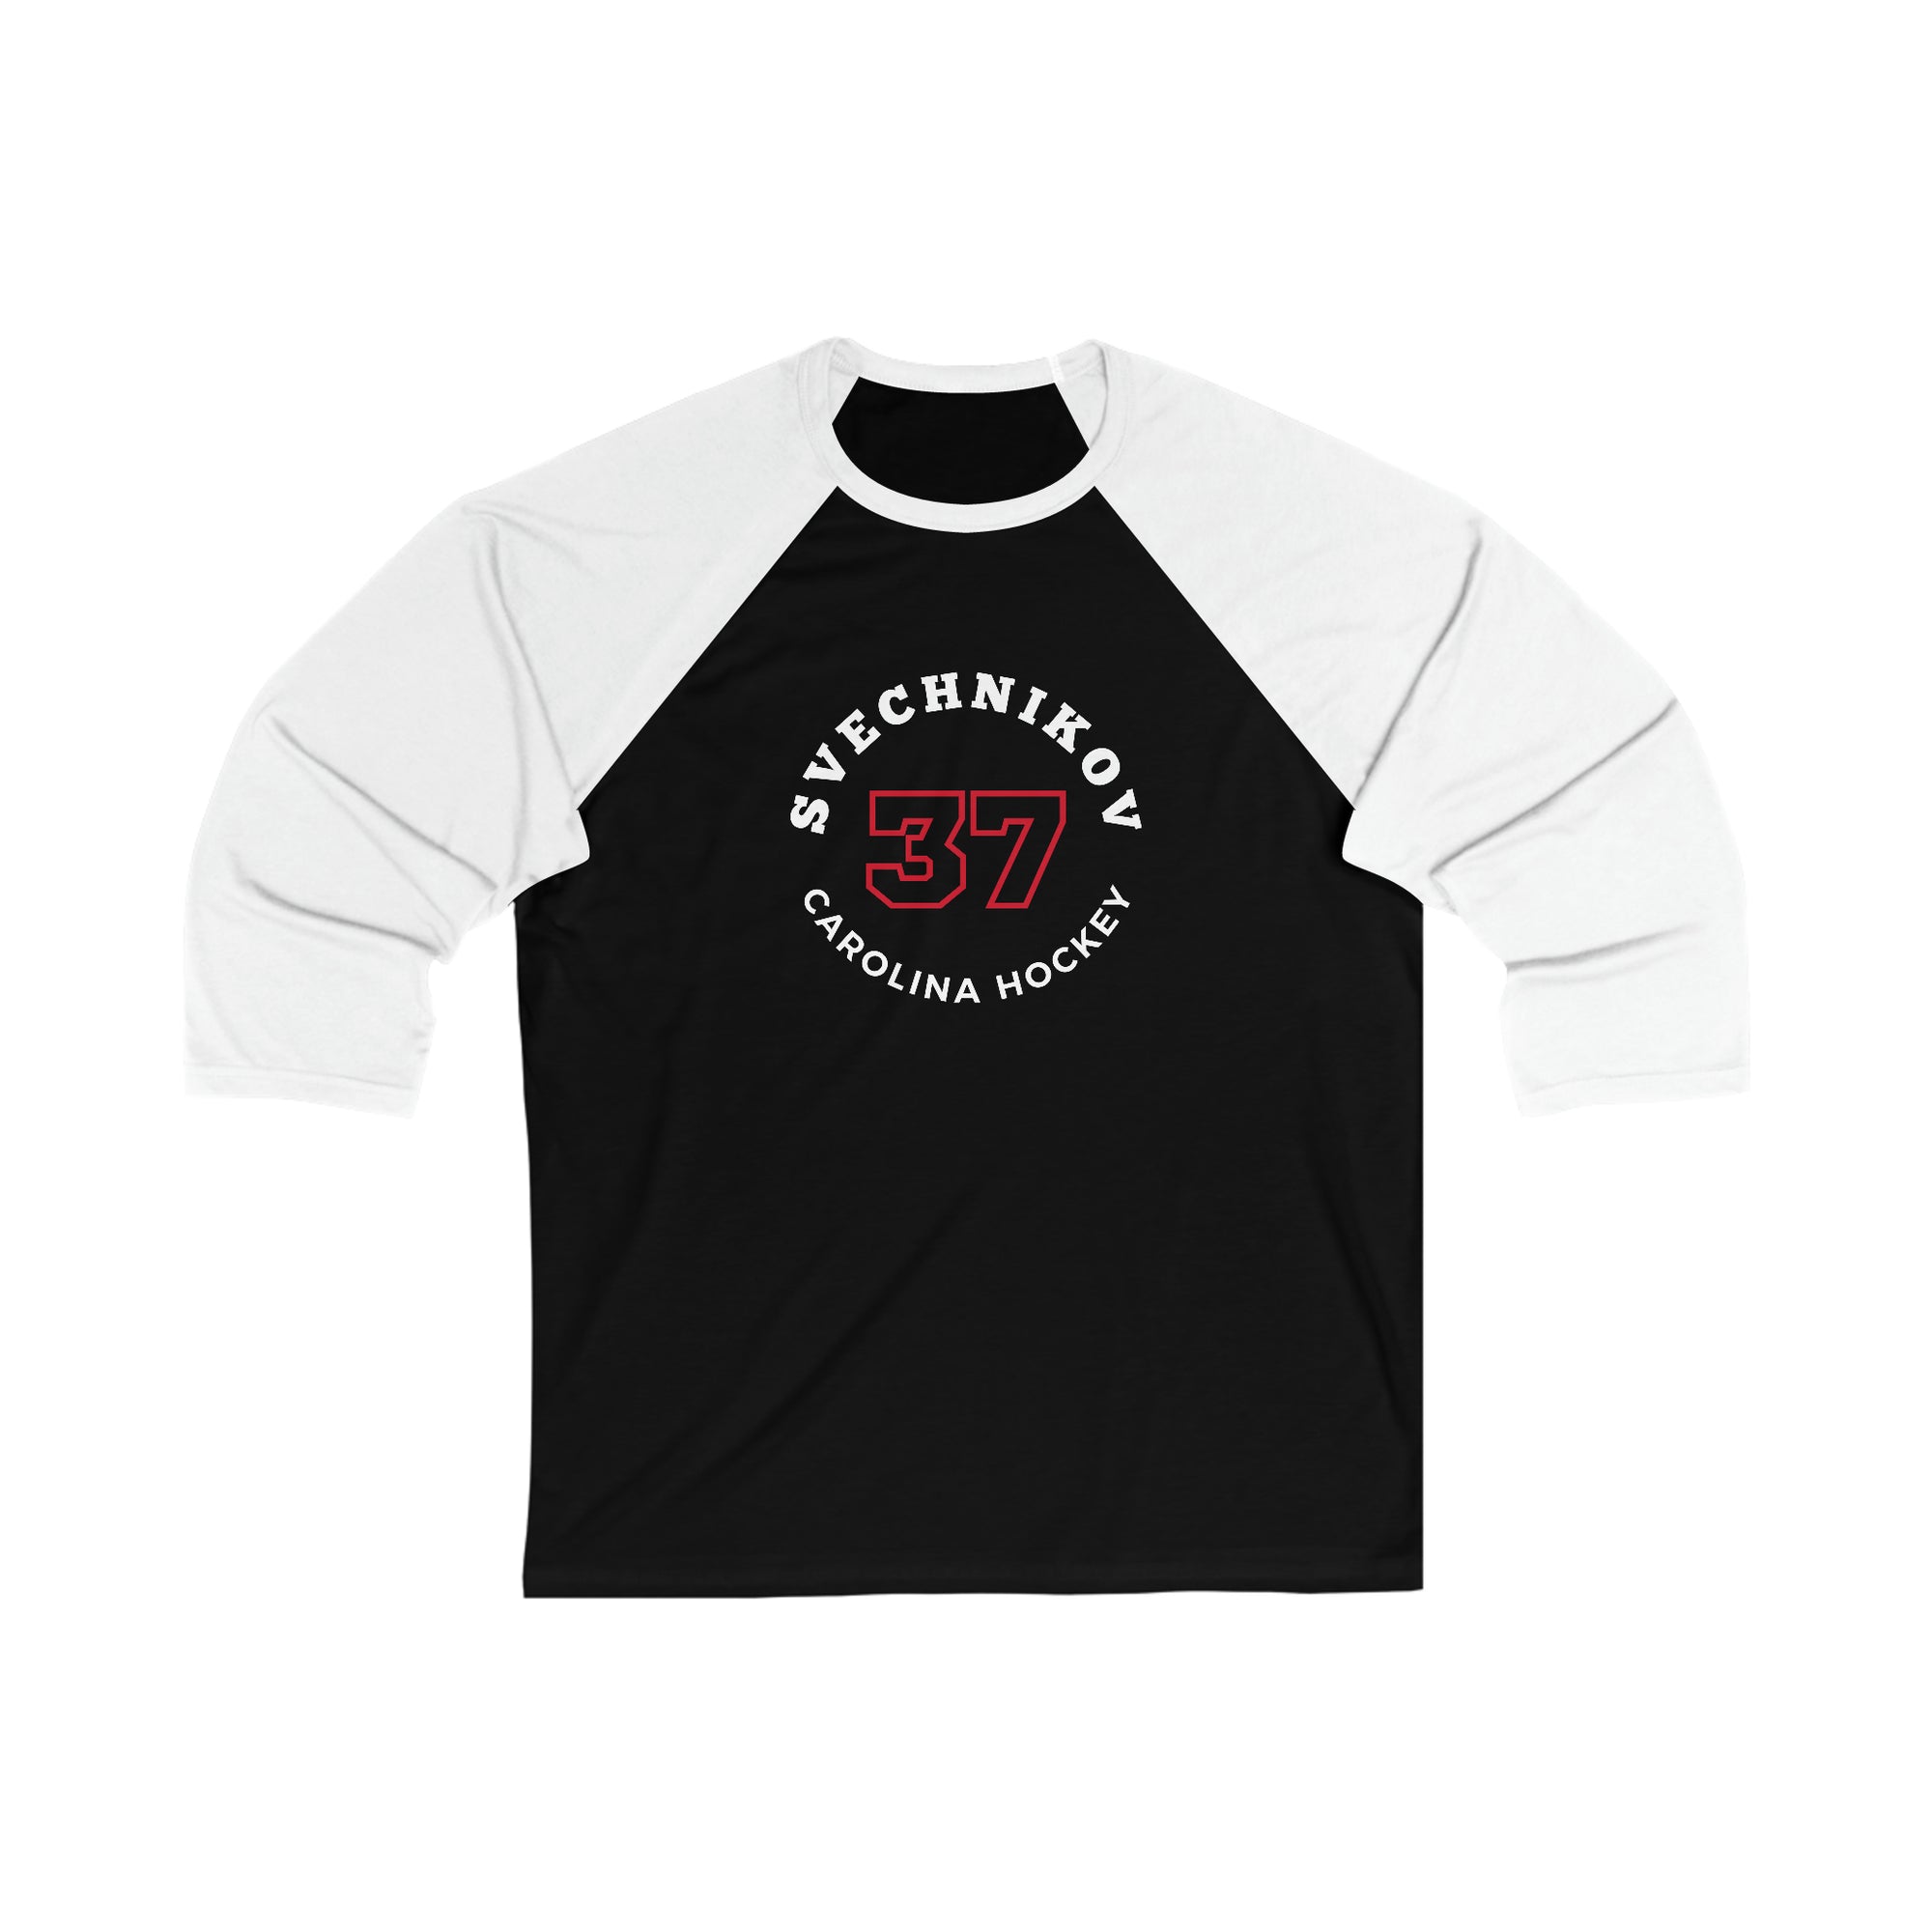 Svechnikov 37 Carolina Hockey Number Arch Design Unisex Tri-Blend 3/4 Sleeve Raglan Baseball Shirt